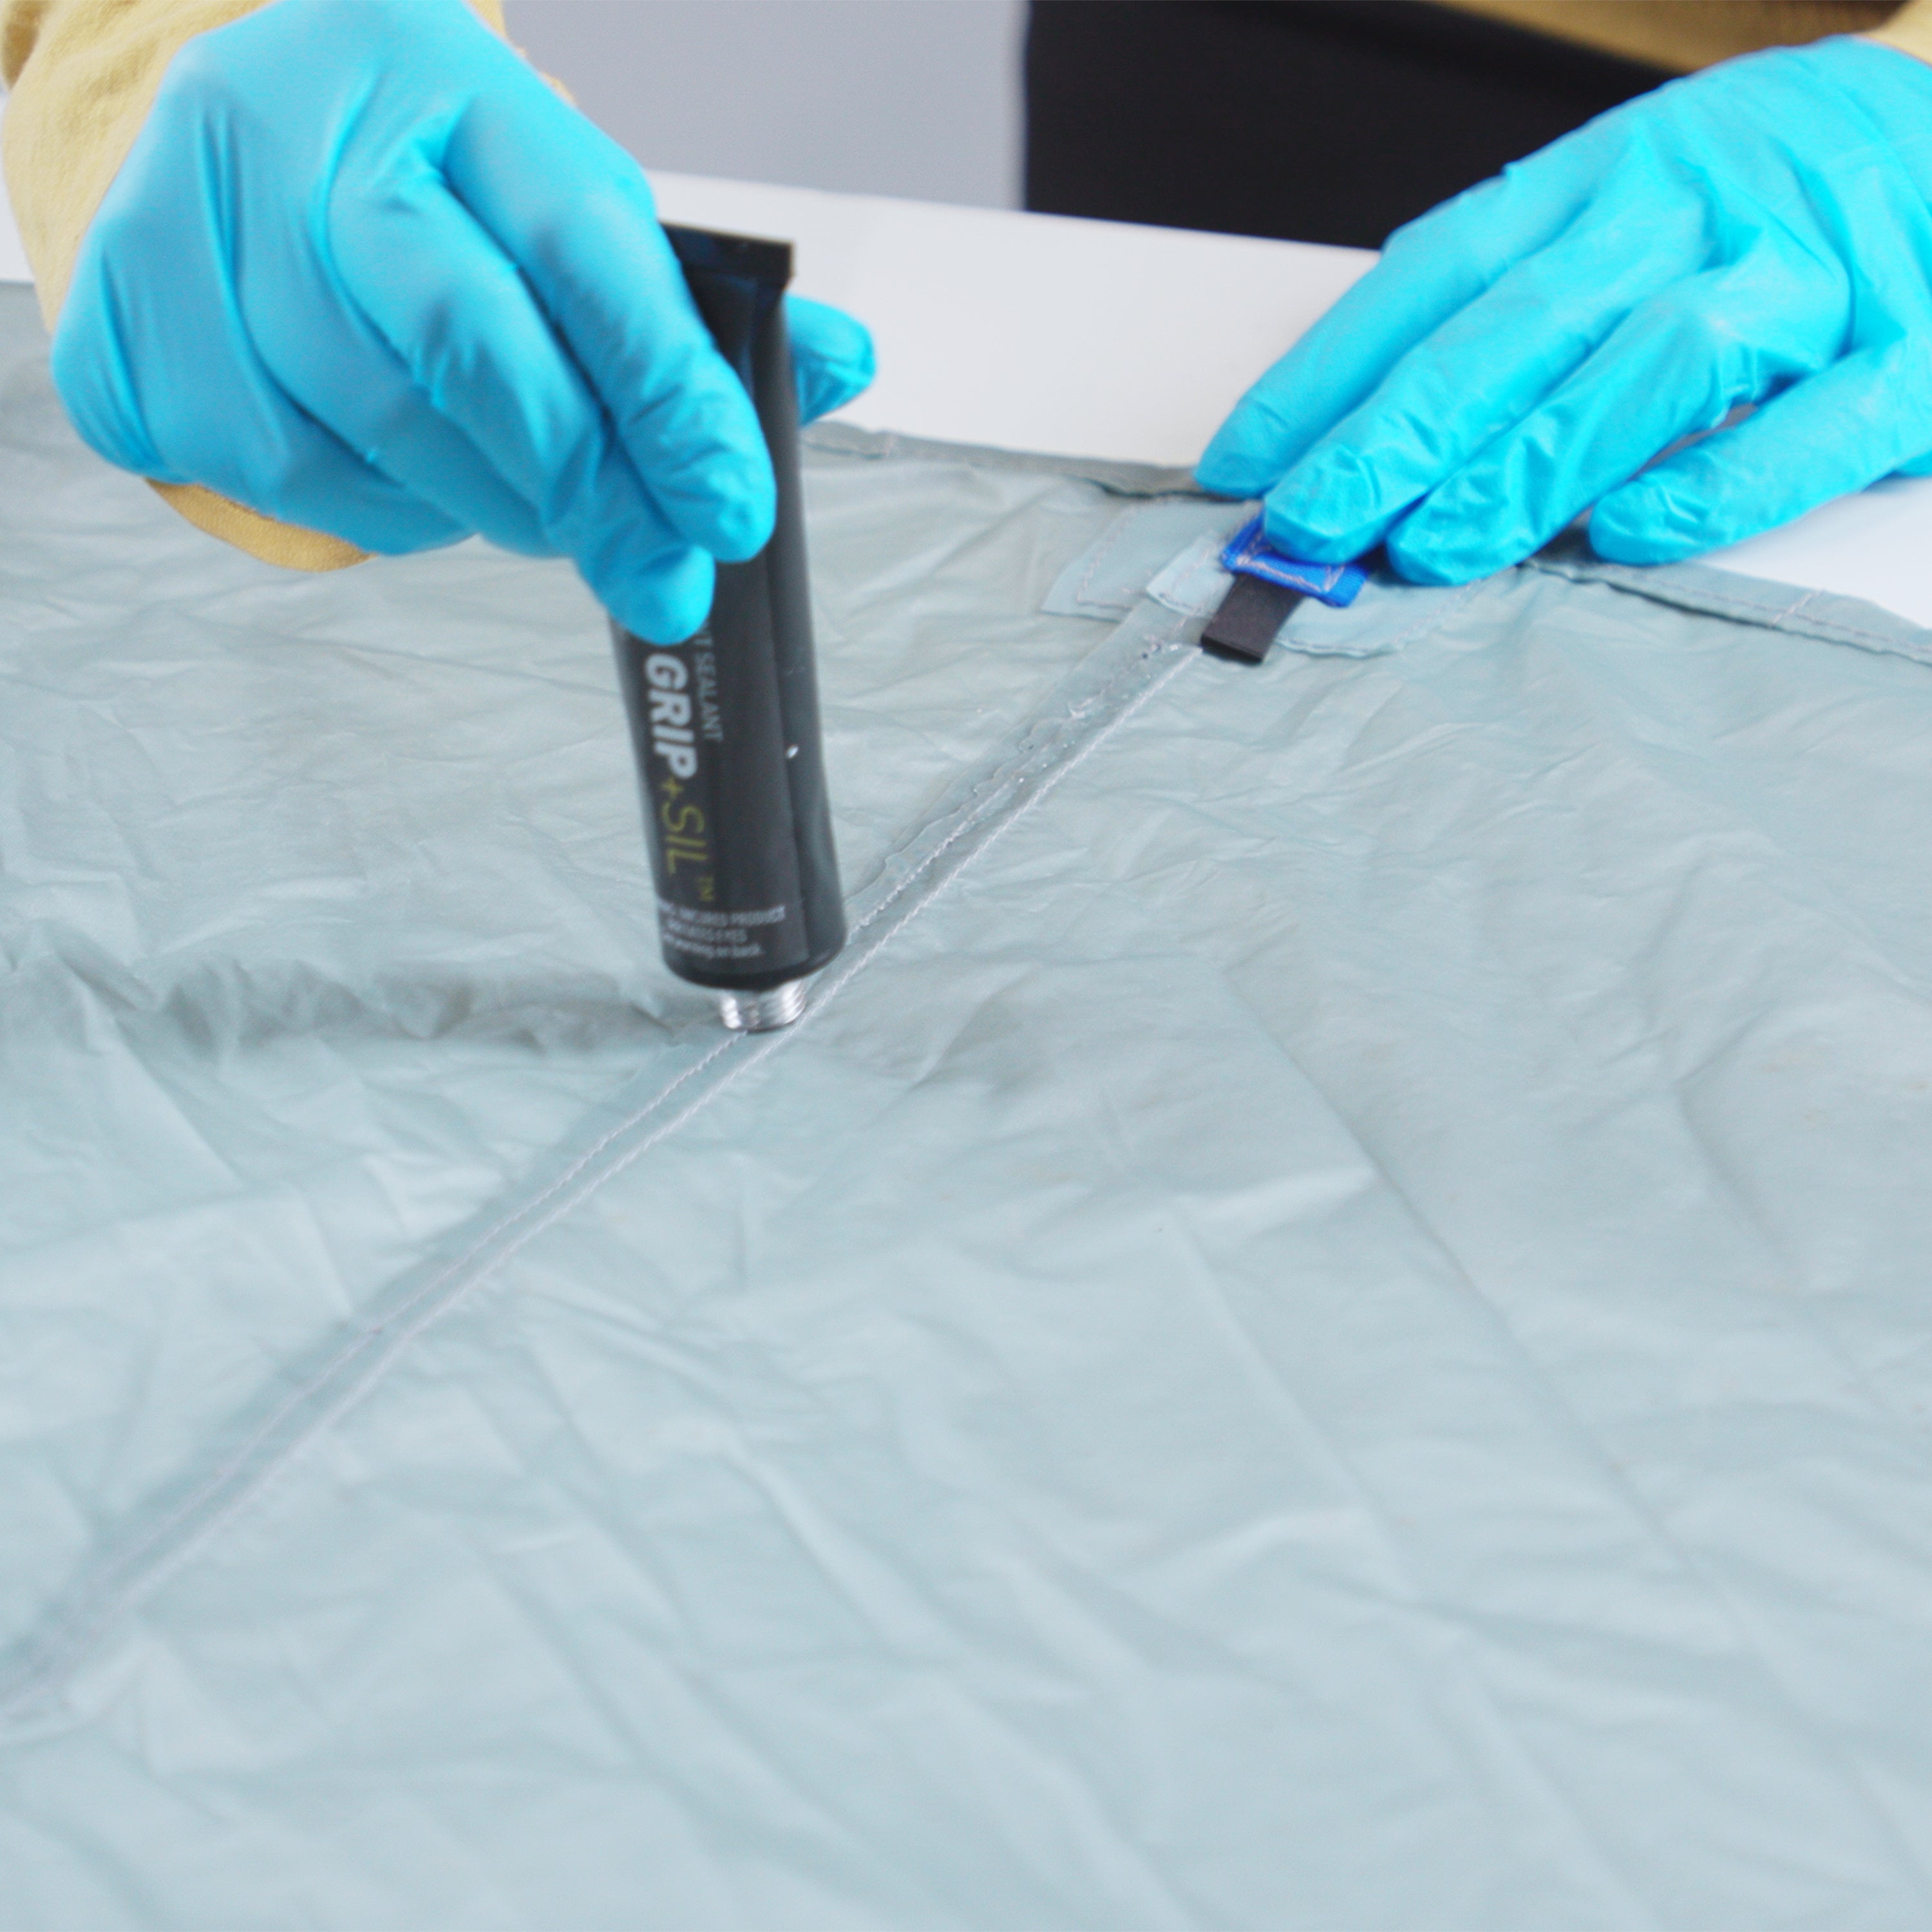 Gear Aid Seam Grip TF Tent Fabric Sealant - Restore Polyurethane